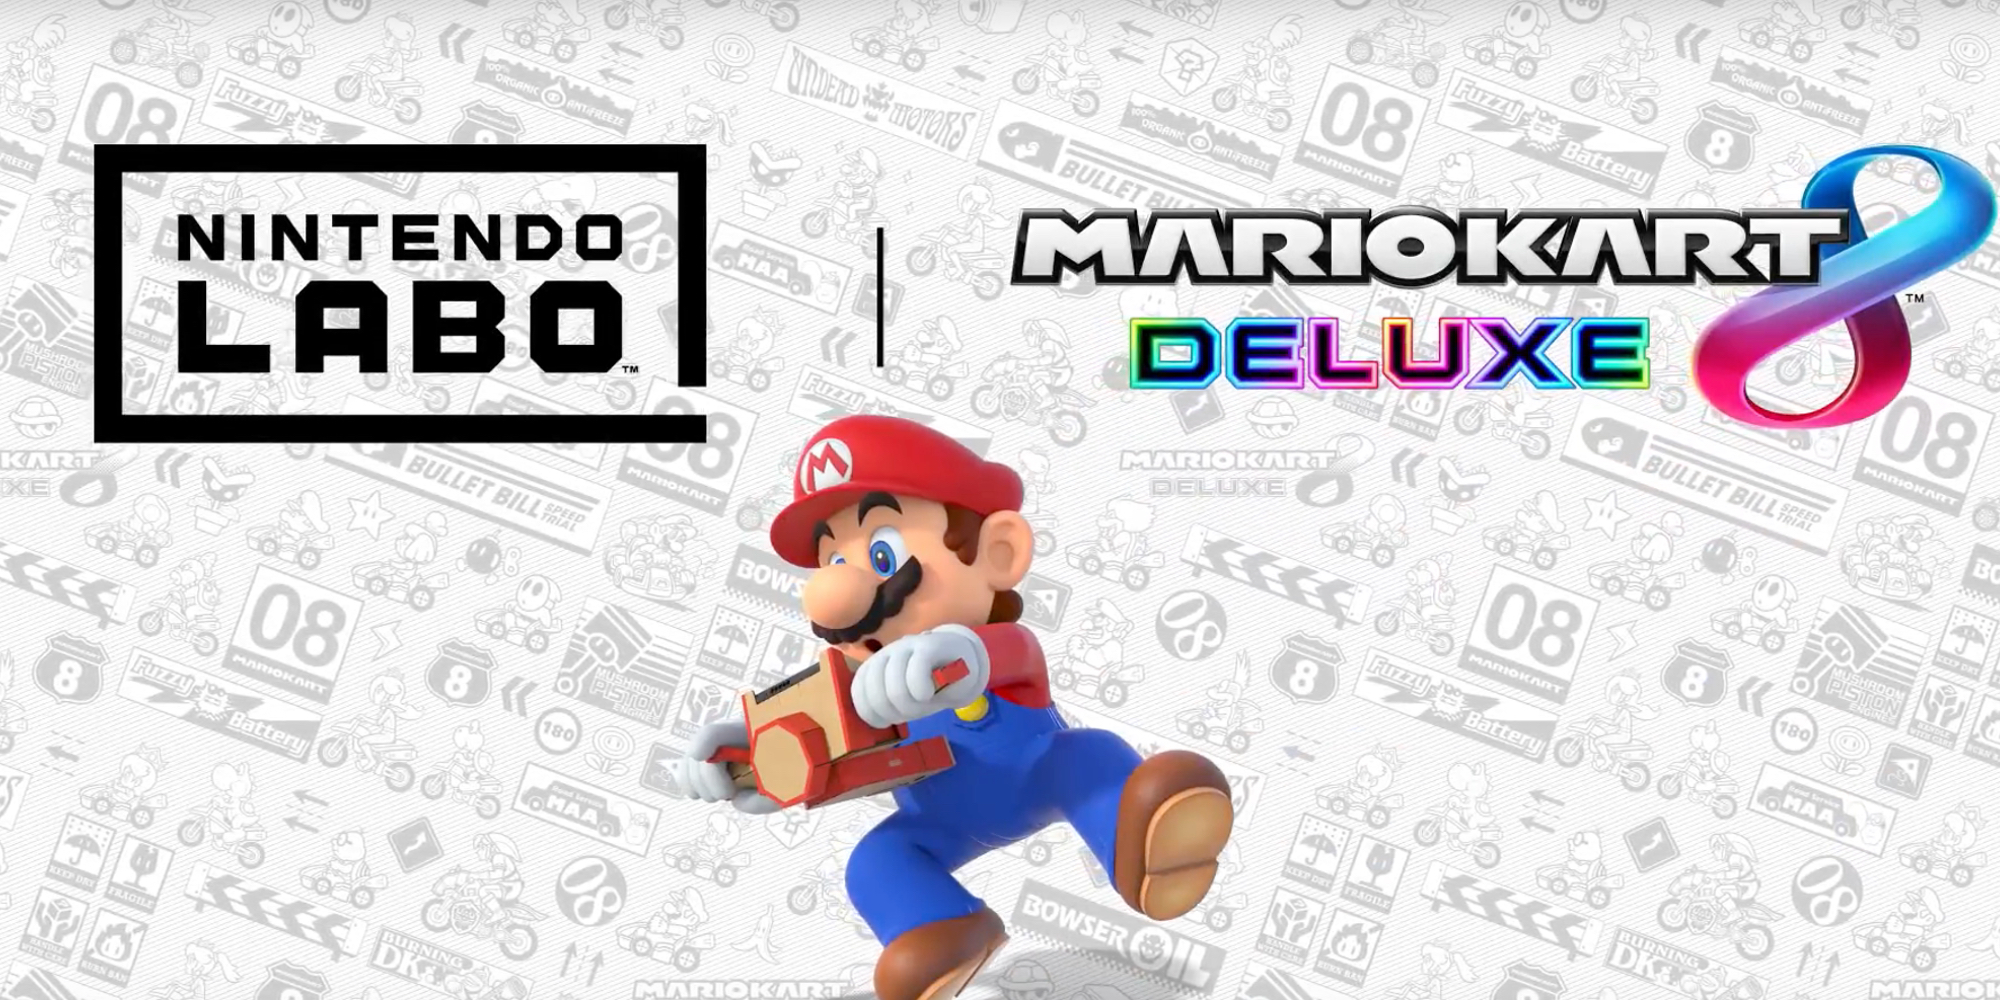 Mario deluxe nintendo. Nintendo of America проекты. Nintendo of America игры. Nintendo Labo VR Kit super Mario Odyssey. Mario Kart 8 Deluxe track.